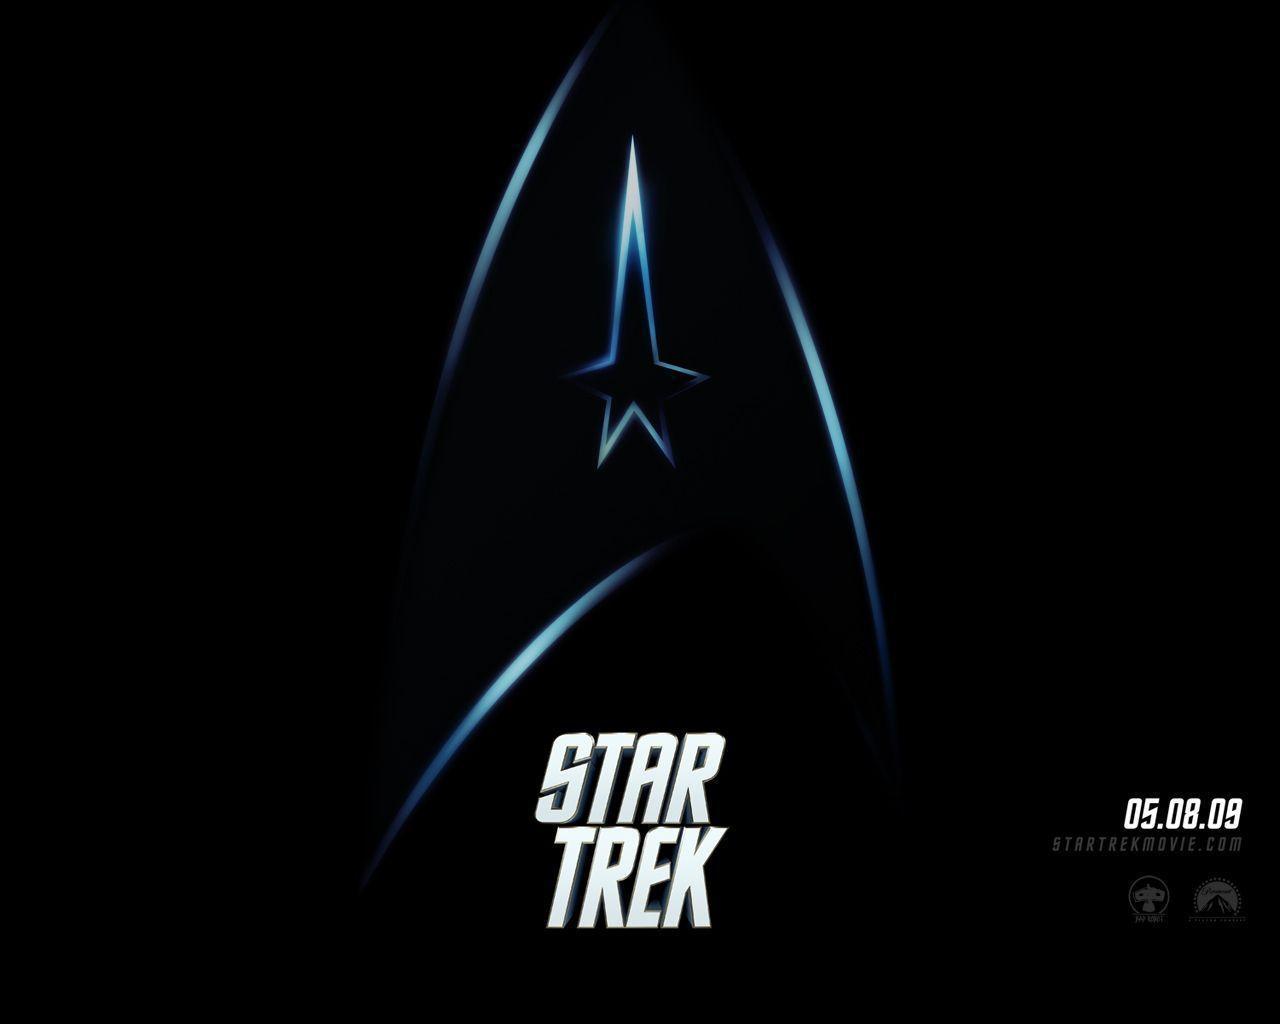 Star Trek (2009) Movie Latest Wallpaper